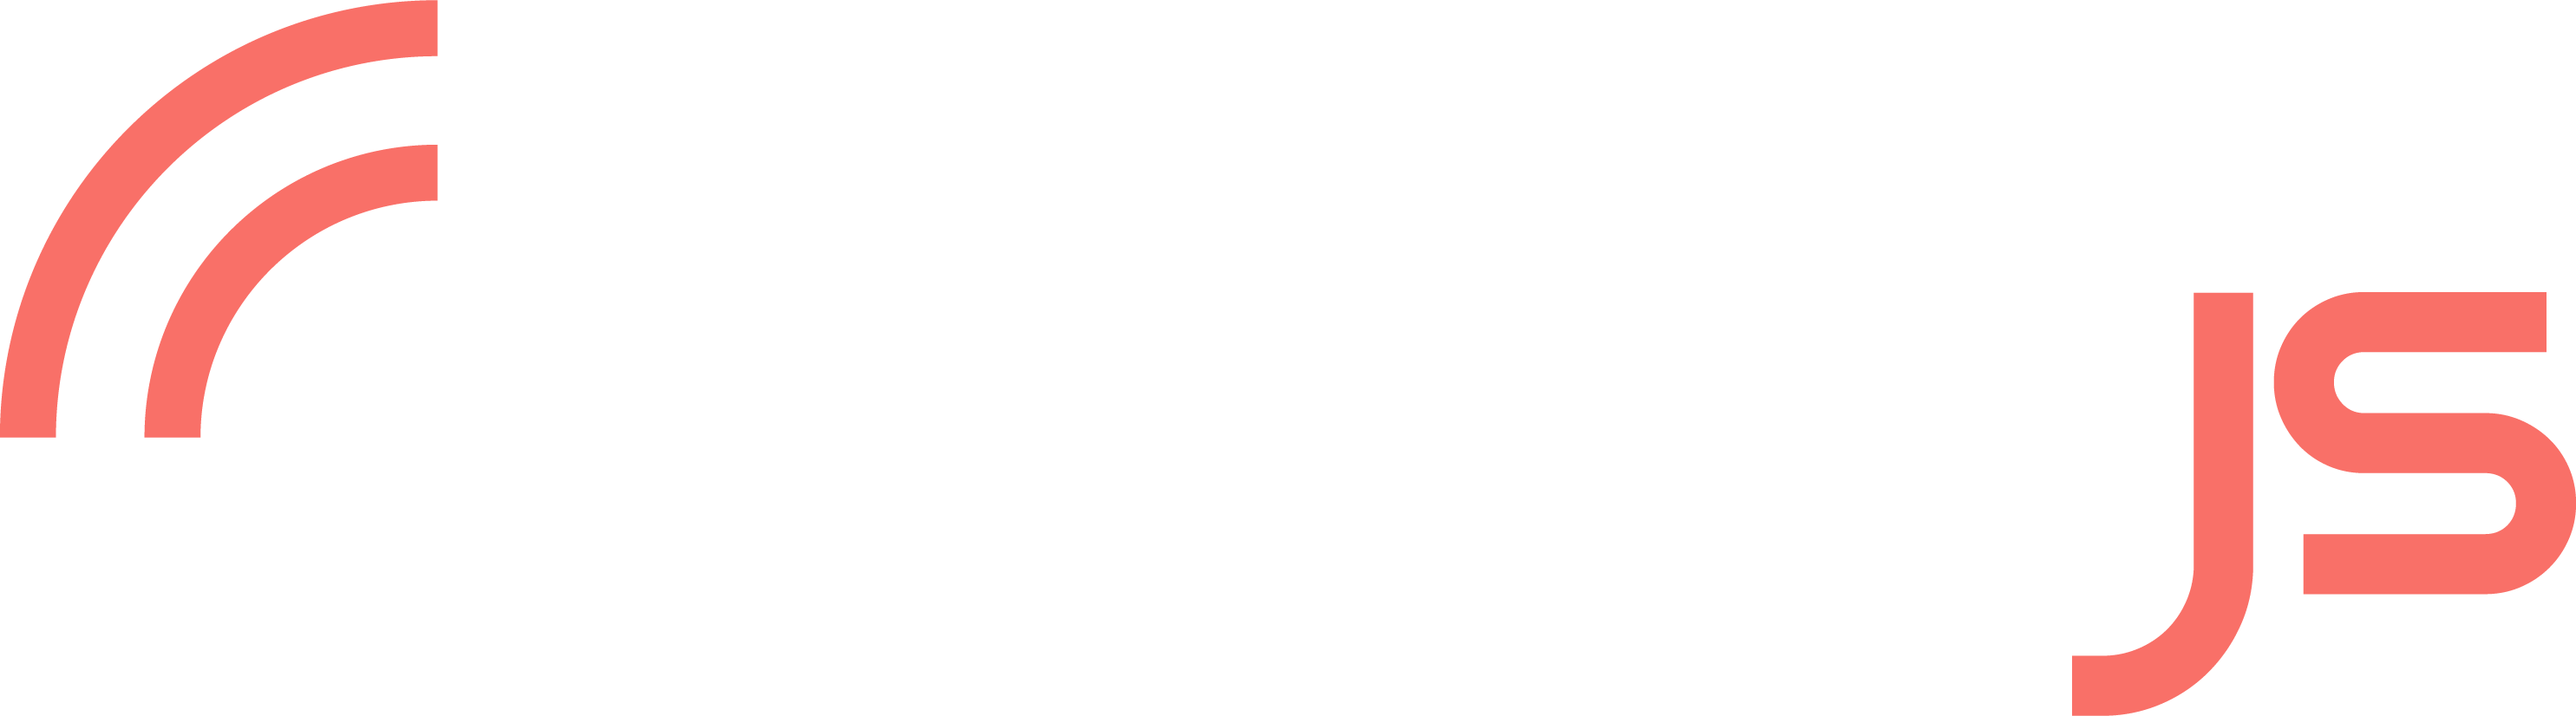 RemoteJS Logo